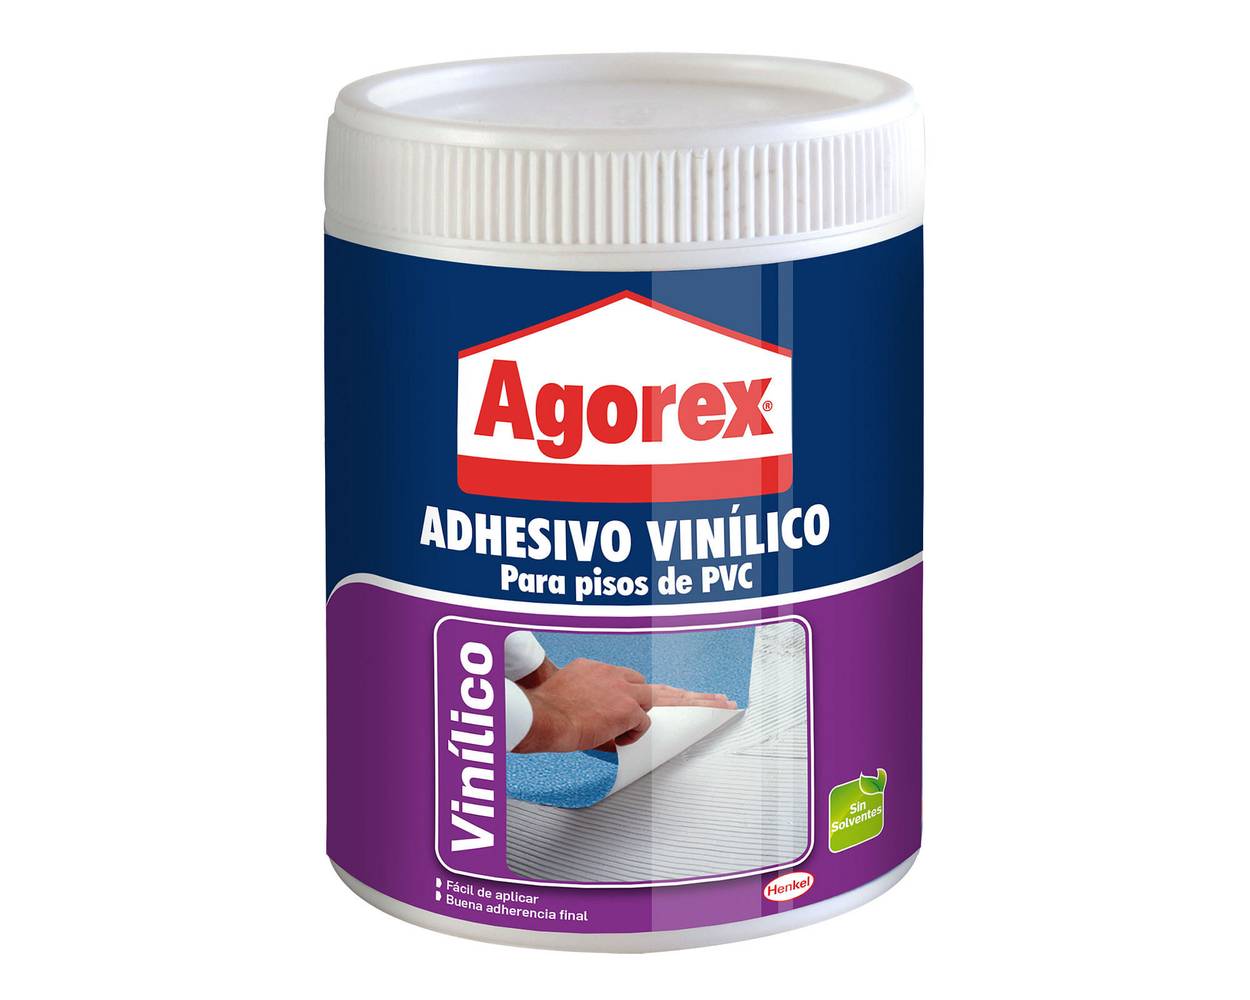 Agorex adhesivo vinílico (900 g)